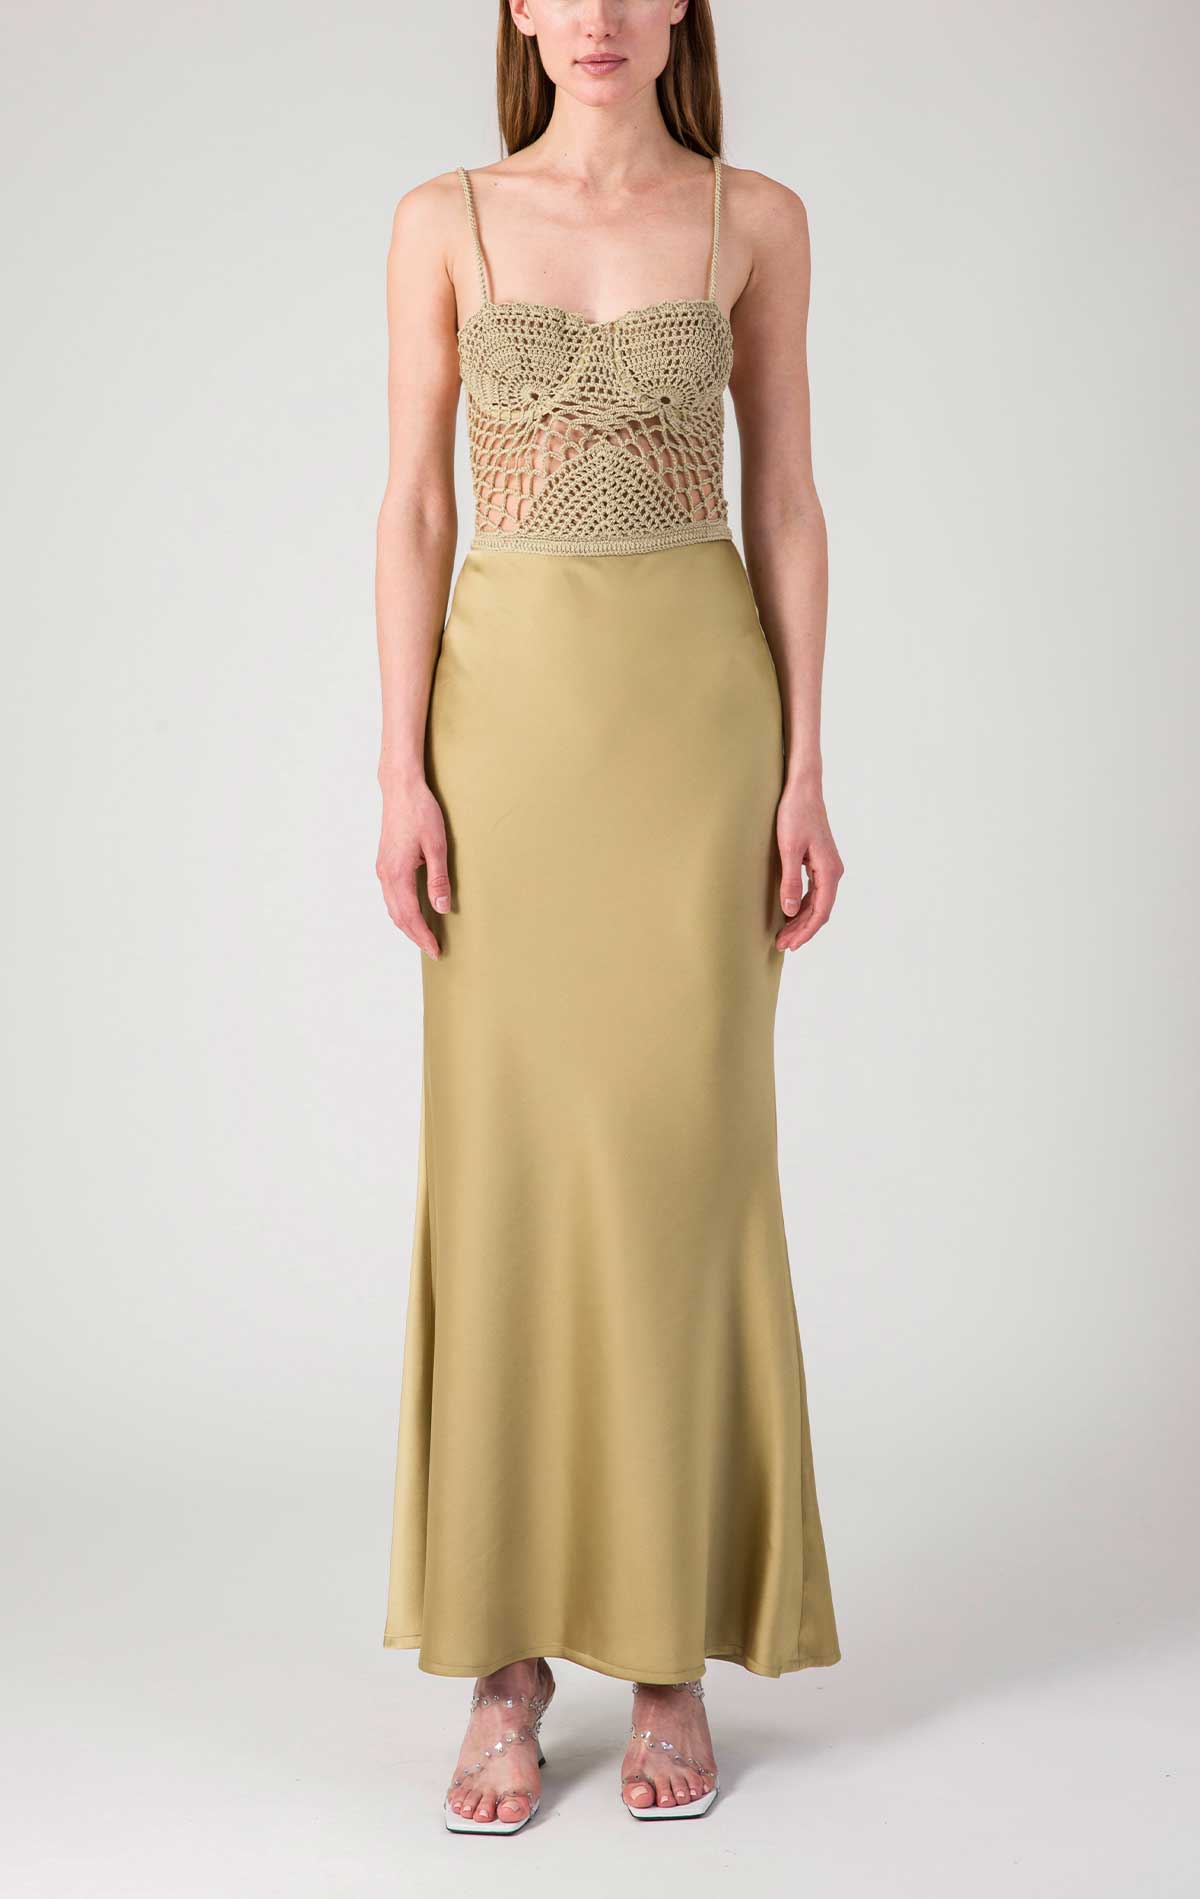 Calipso Dress Gold Olive Crochet and Satin - Silvia Astore